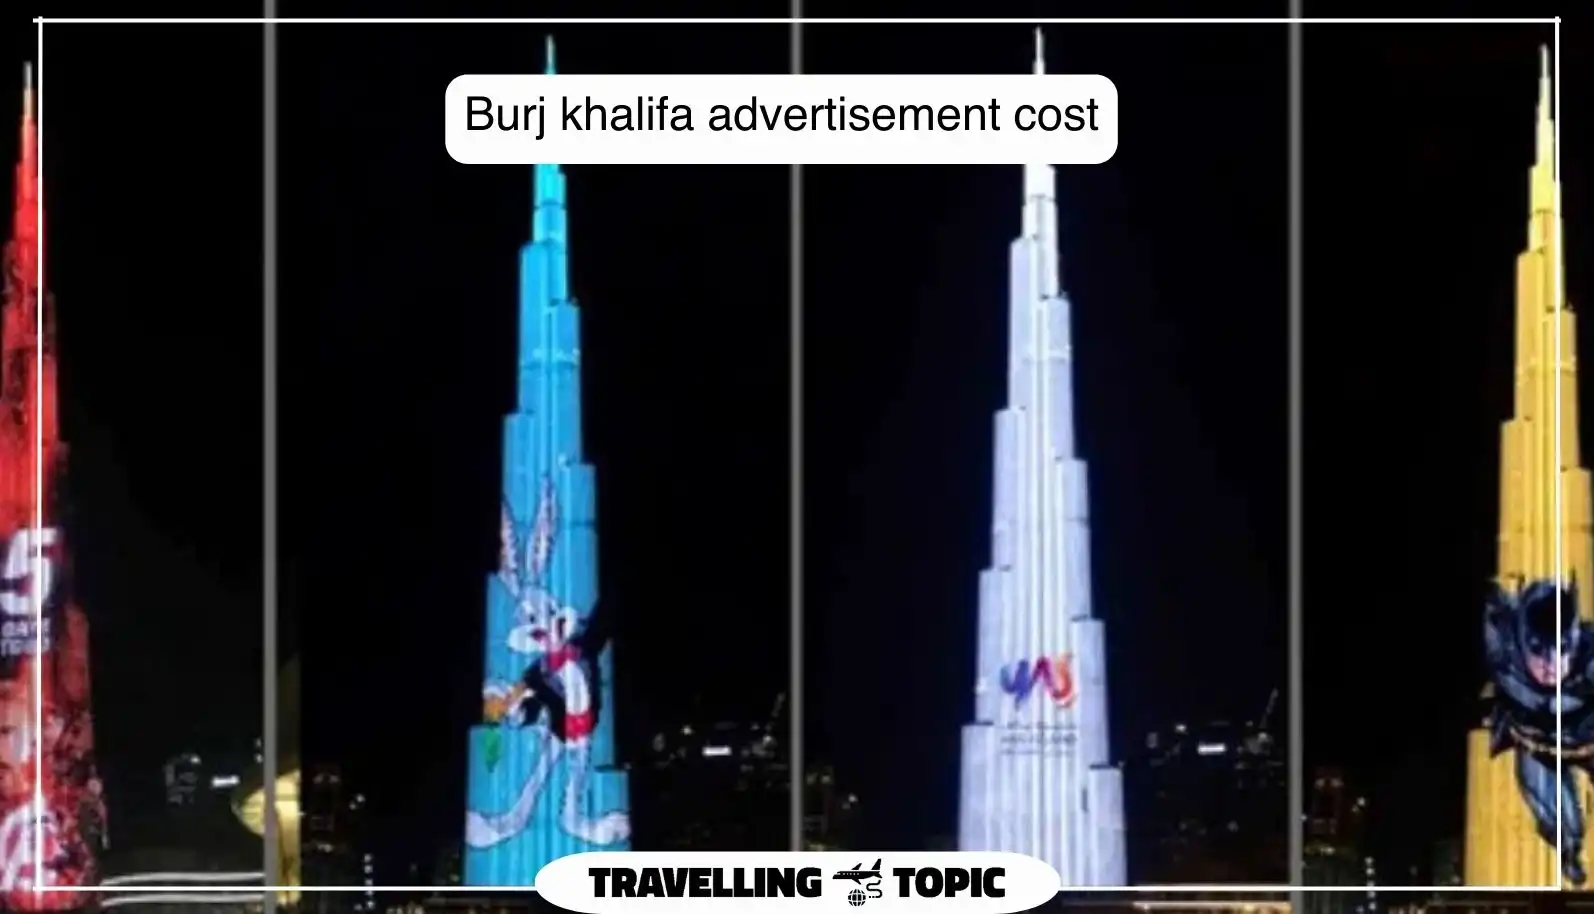 Burj khalifa advertisement costs